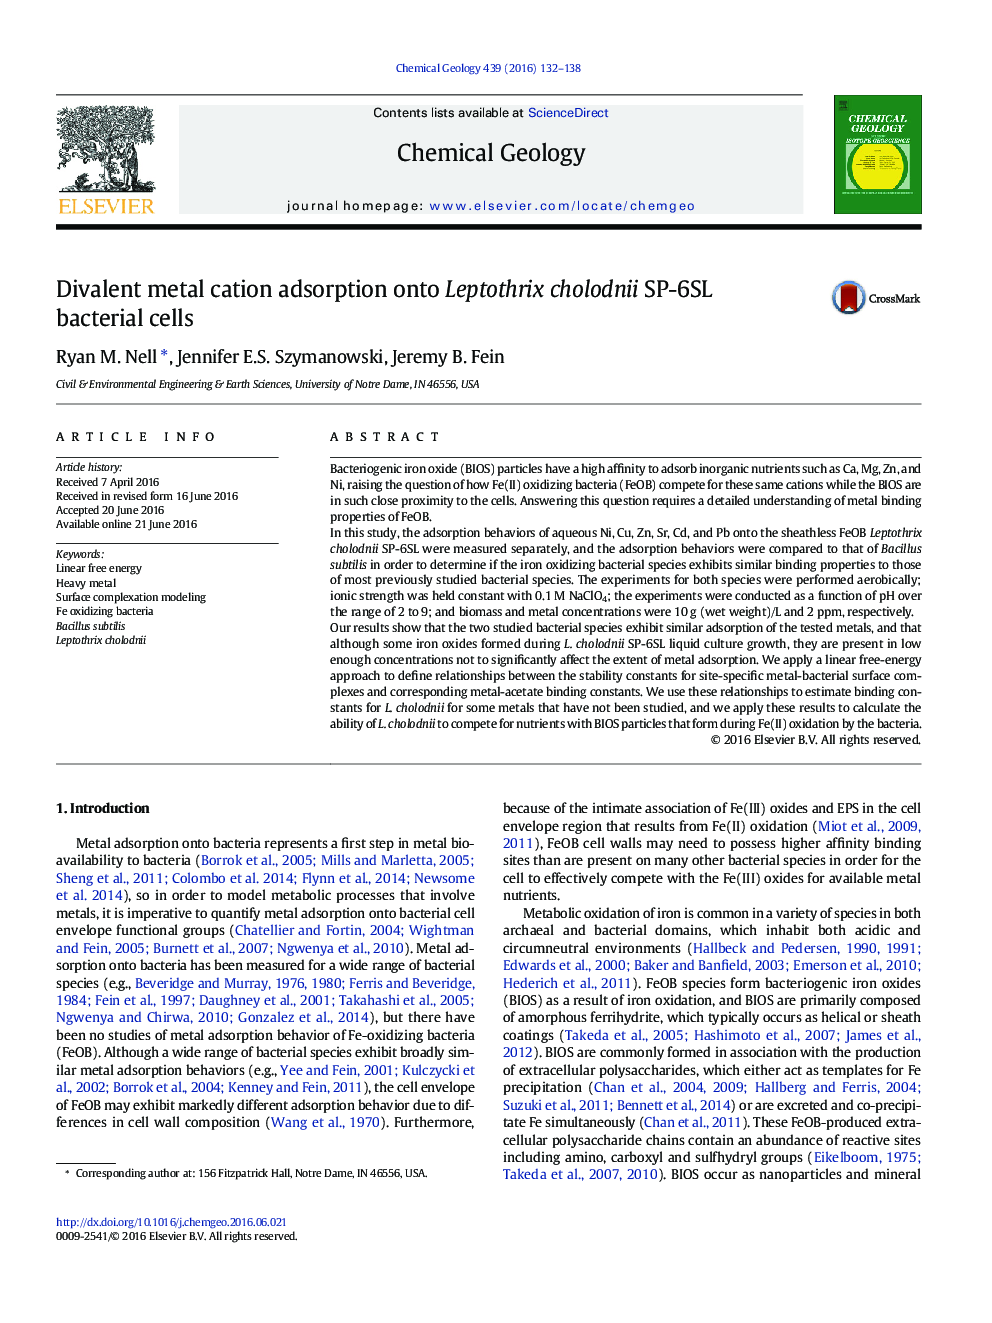 Divalent metal cation adsorption onto Leptothrix cholodnii SP-6SL bacterial cells